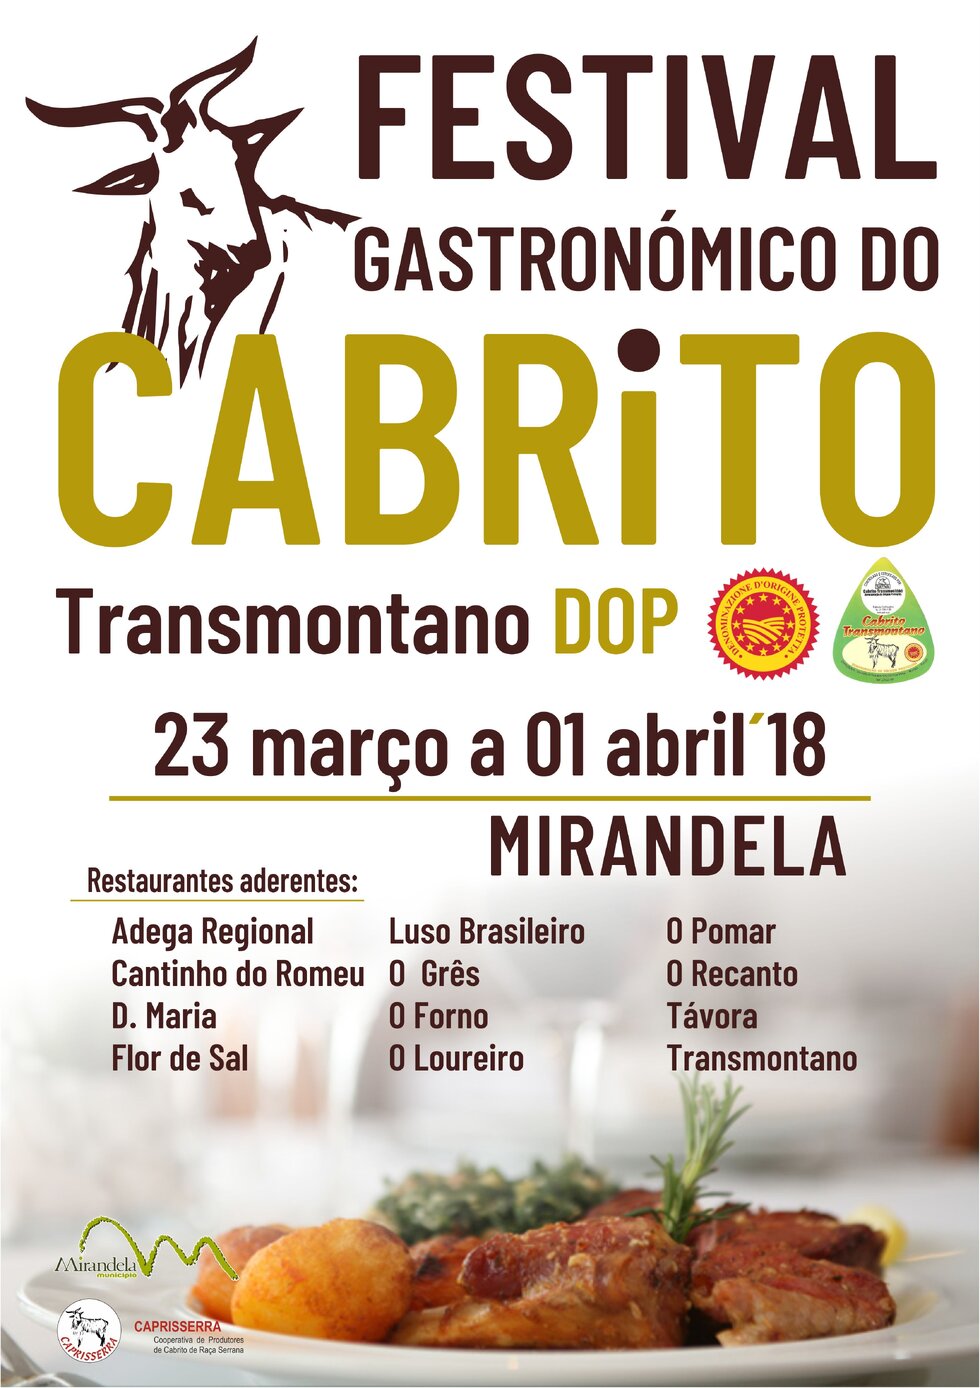 cartaz_Festival_Gastron_mico_do_Cabrito_Transmontano_DOP